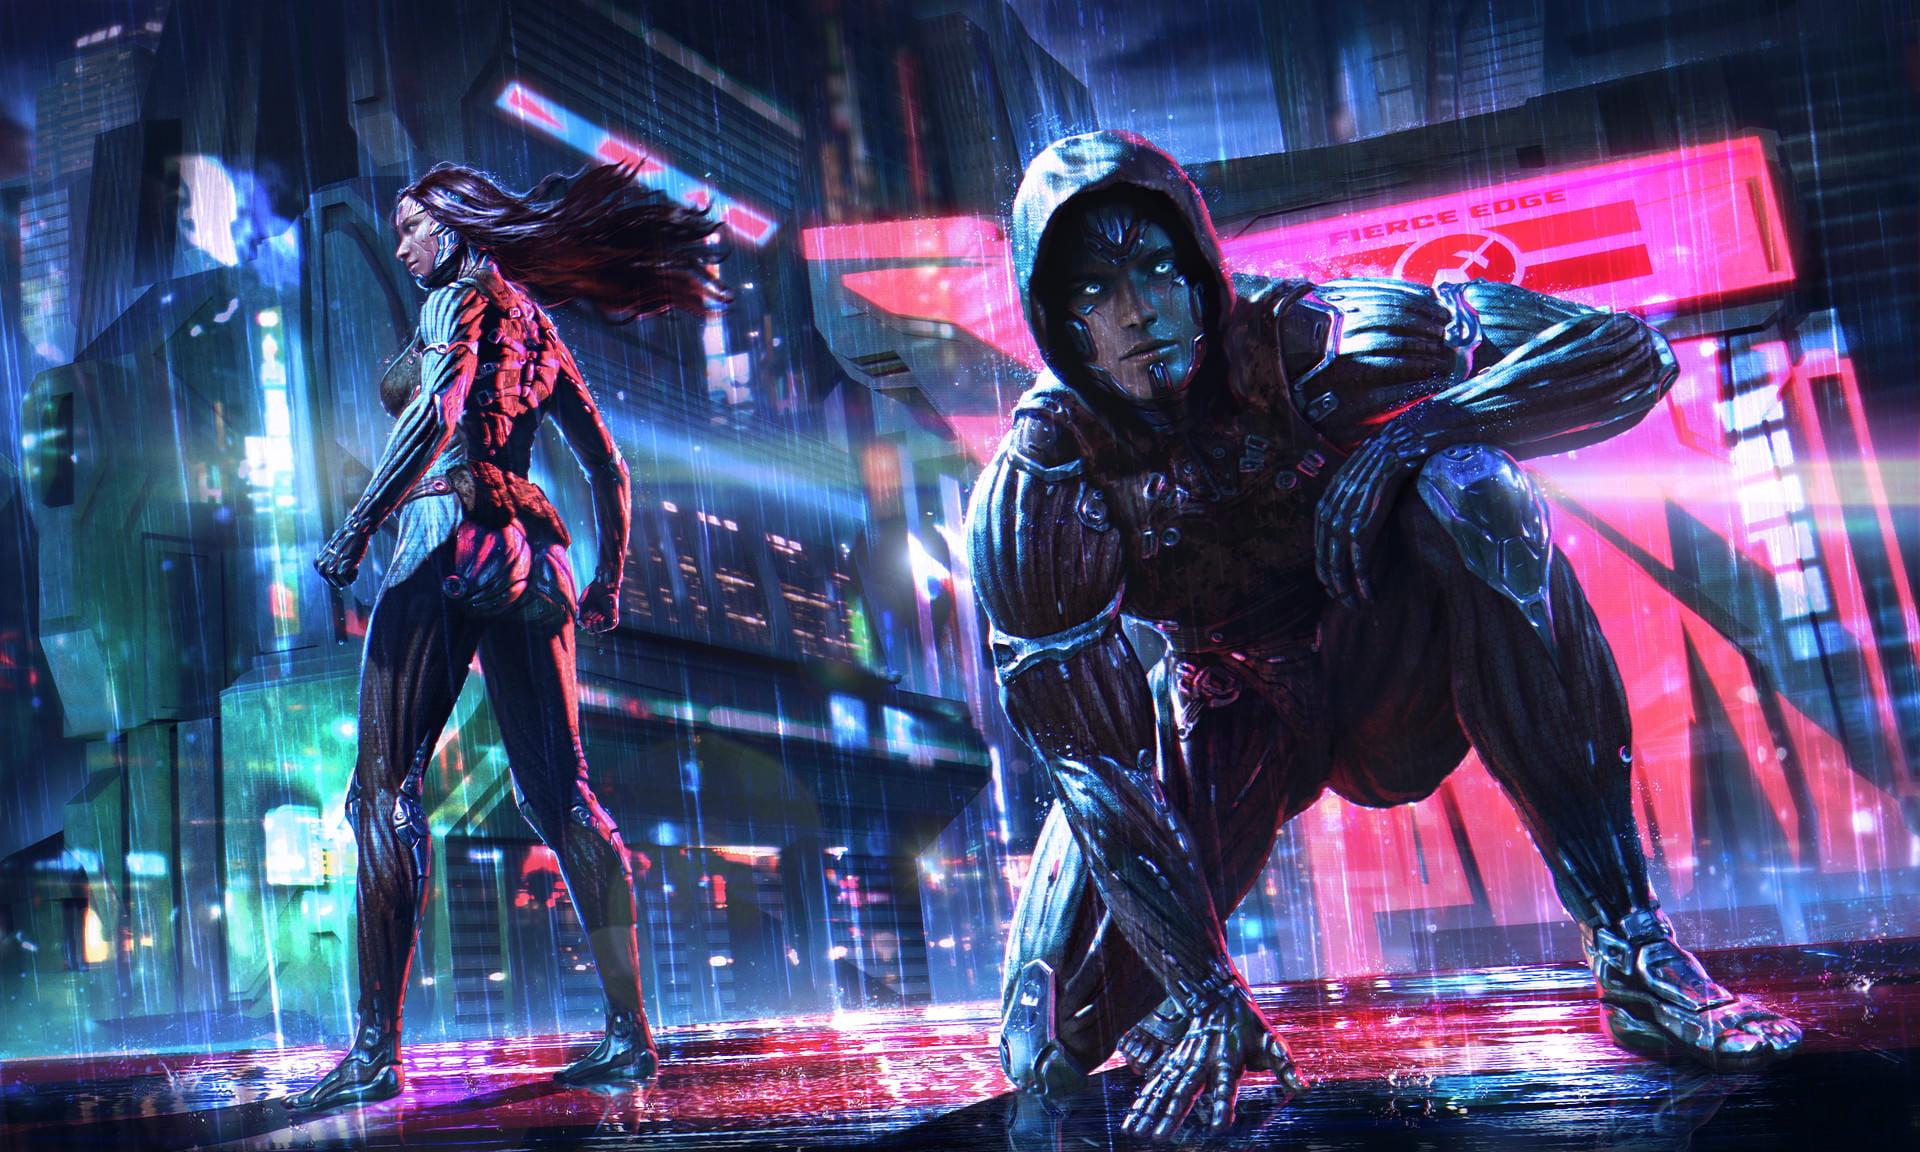 Venom and Carniage wallpaper, cyberpunk, science fiction, neon HD